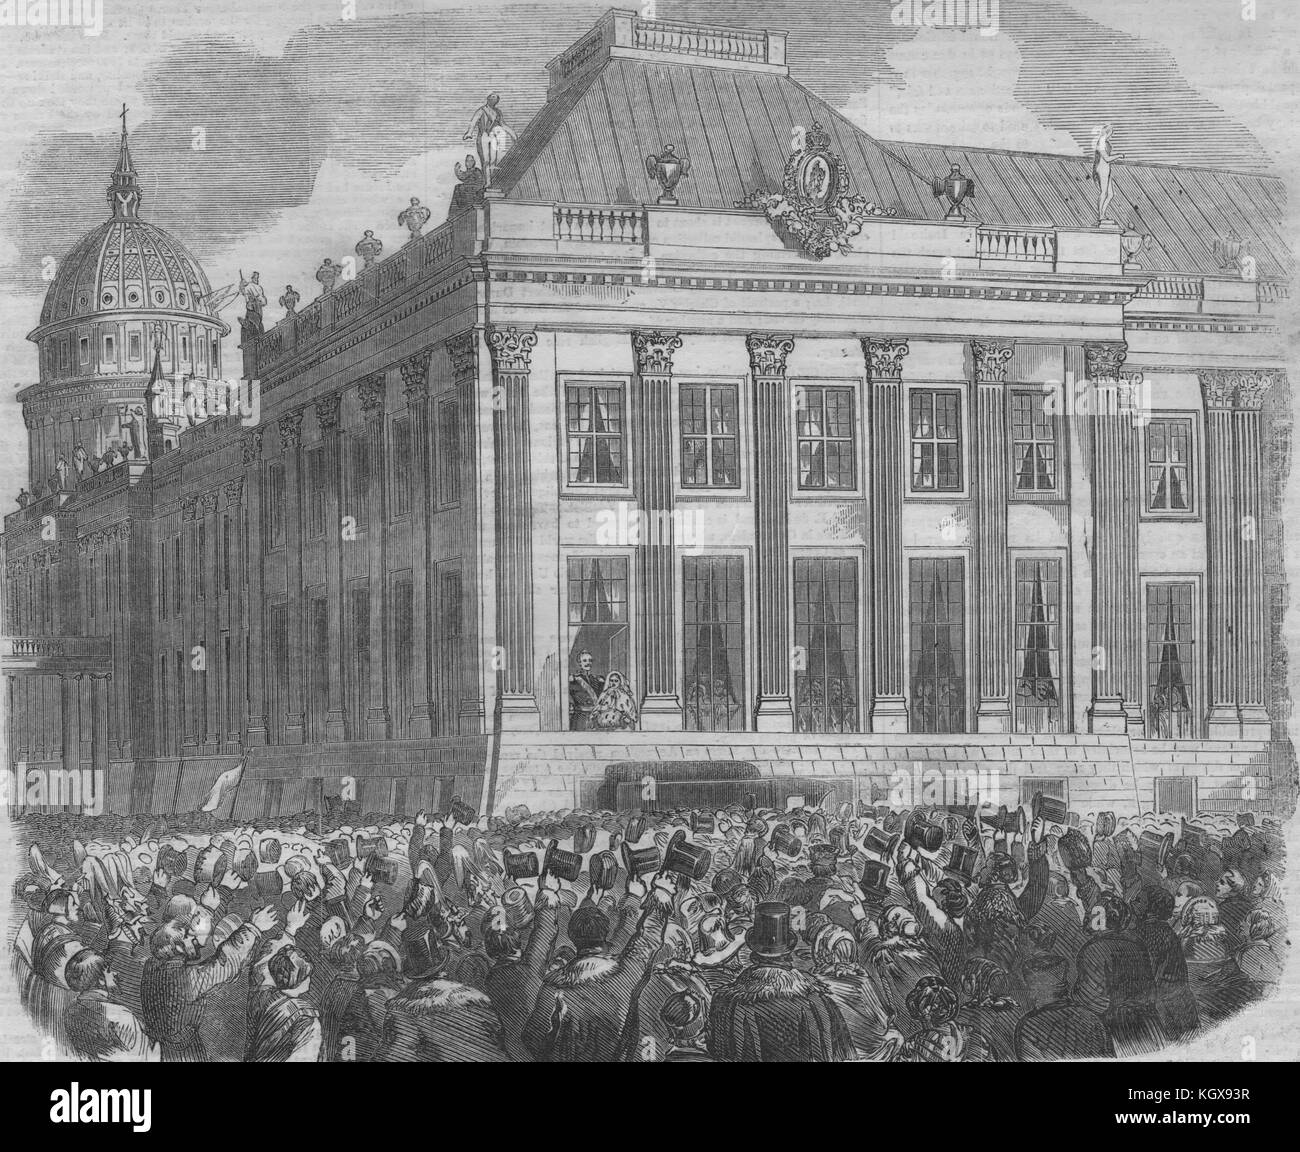 Prince & Princess Frederick William. King's Palace, Potsdam. Brandenburg 1858. The Illustrated London News Stock Photo